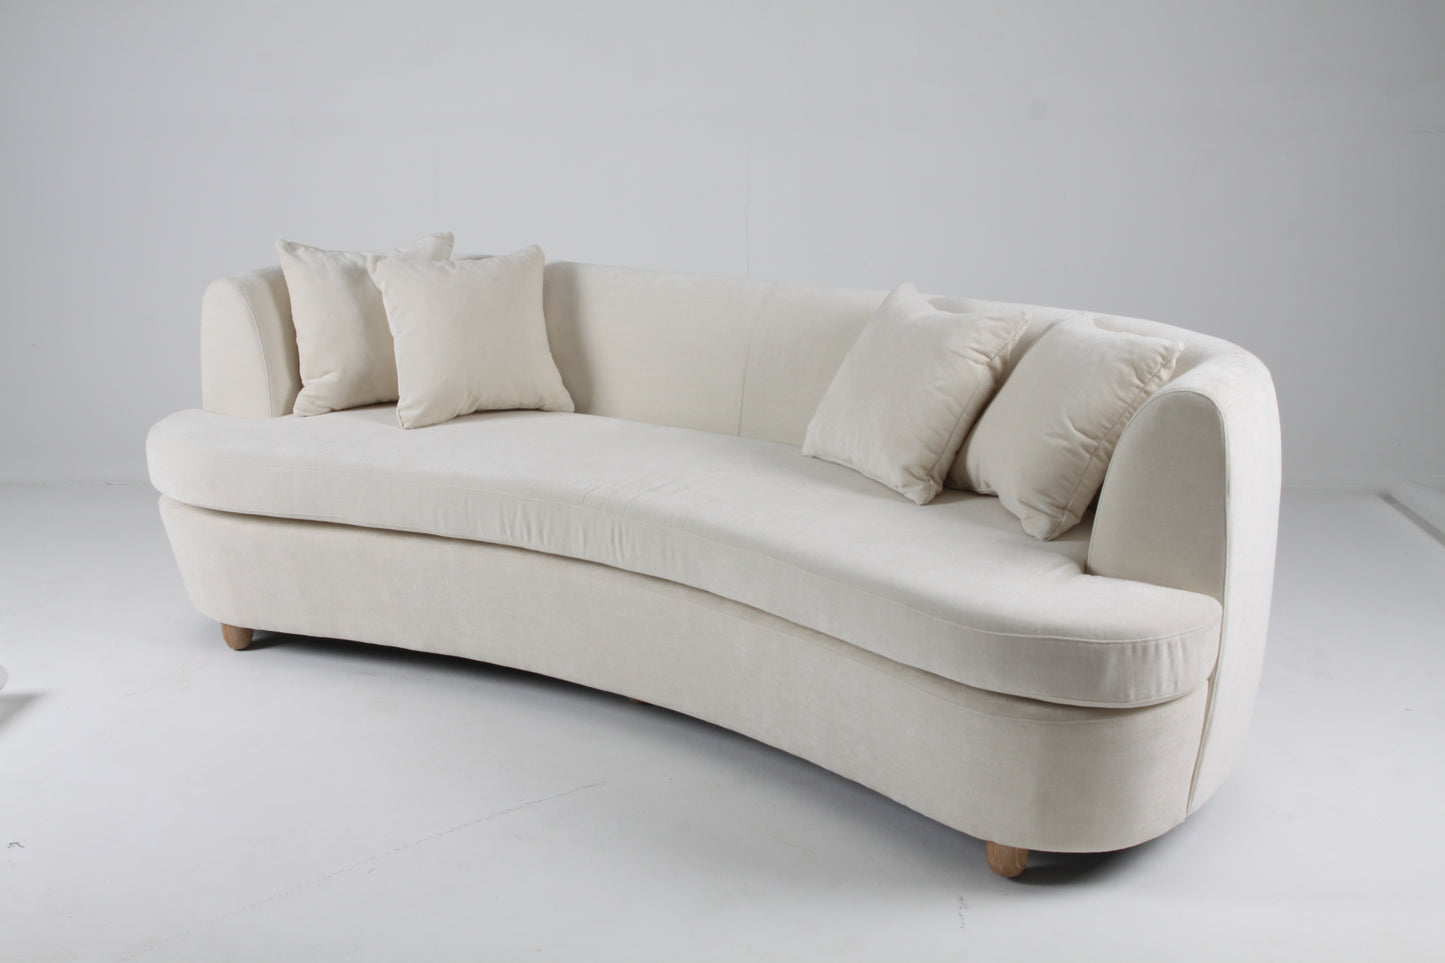 The Bonaire Sofa